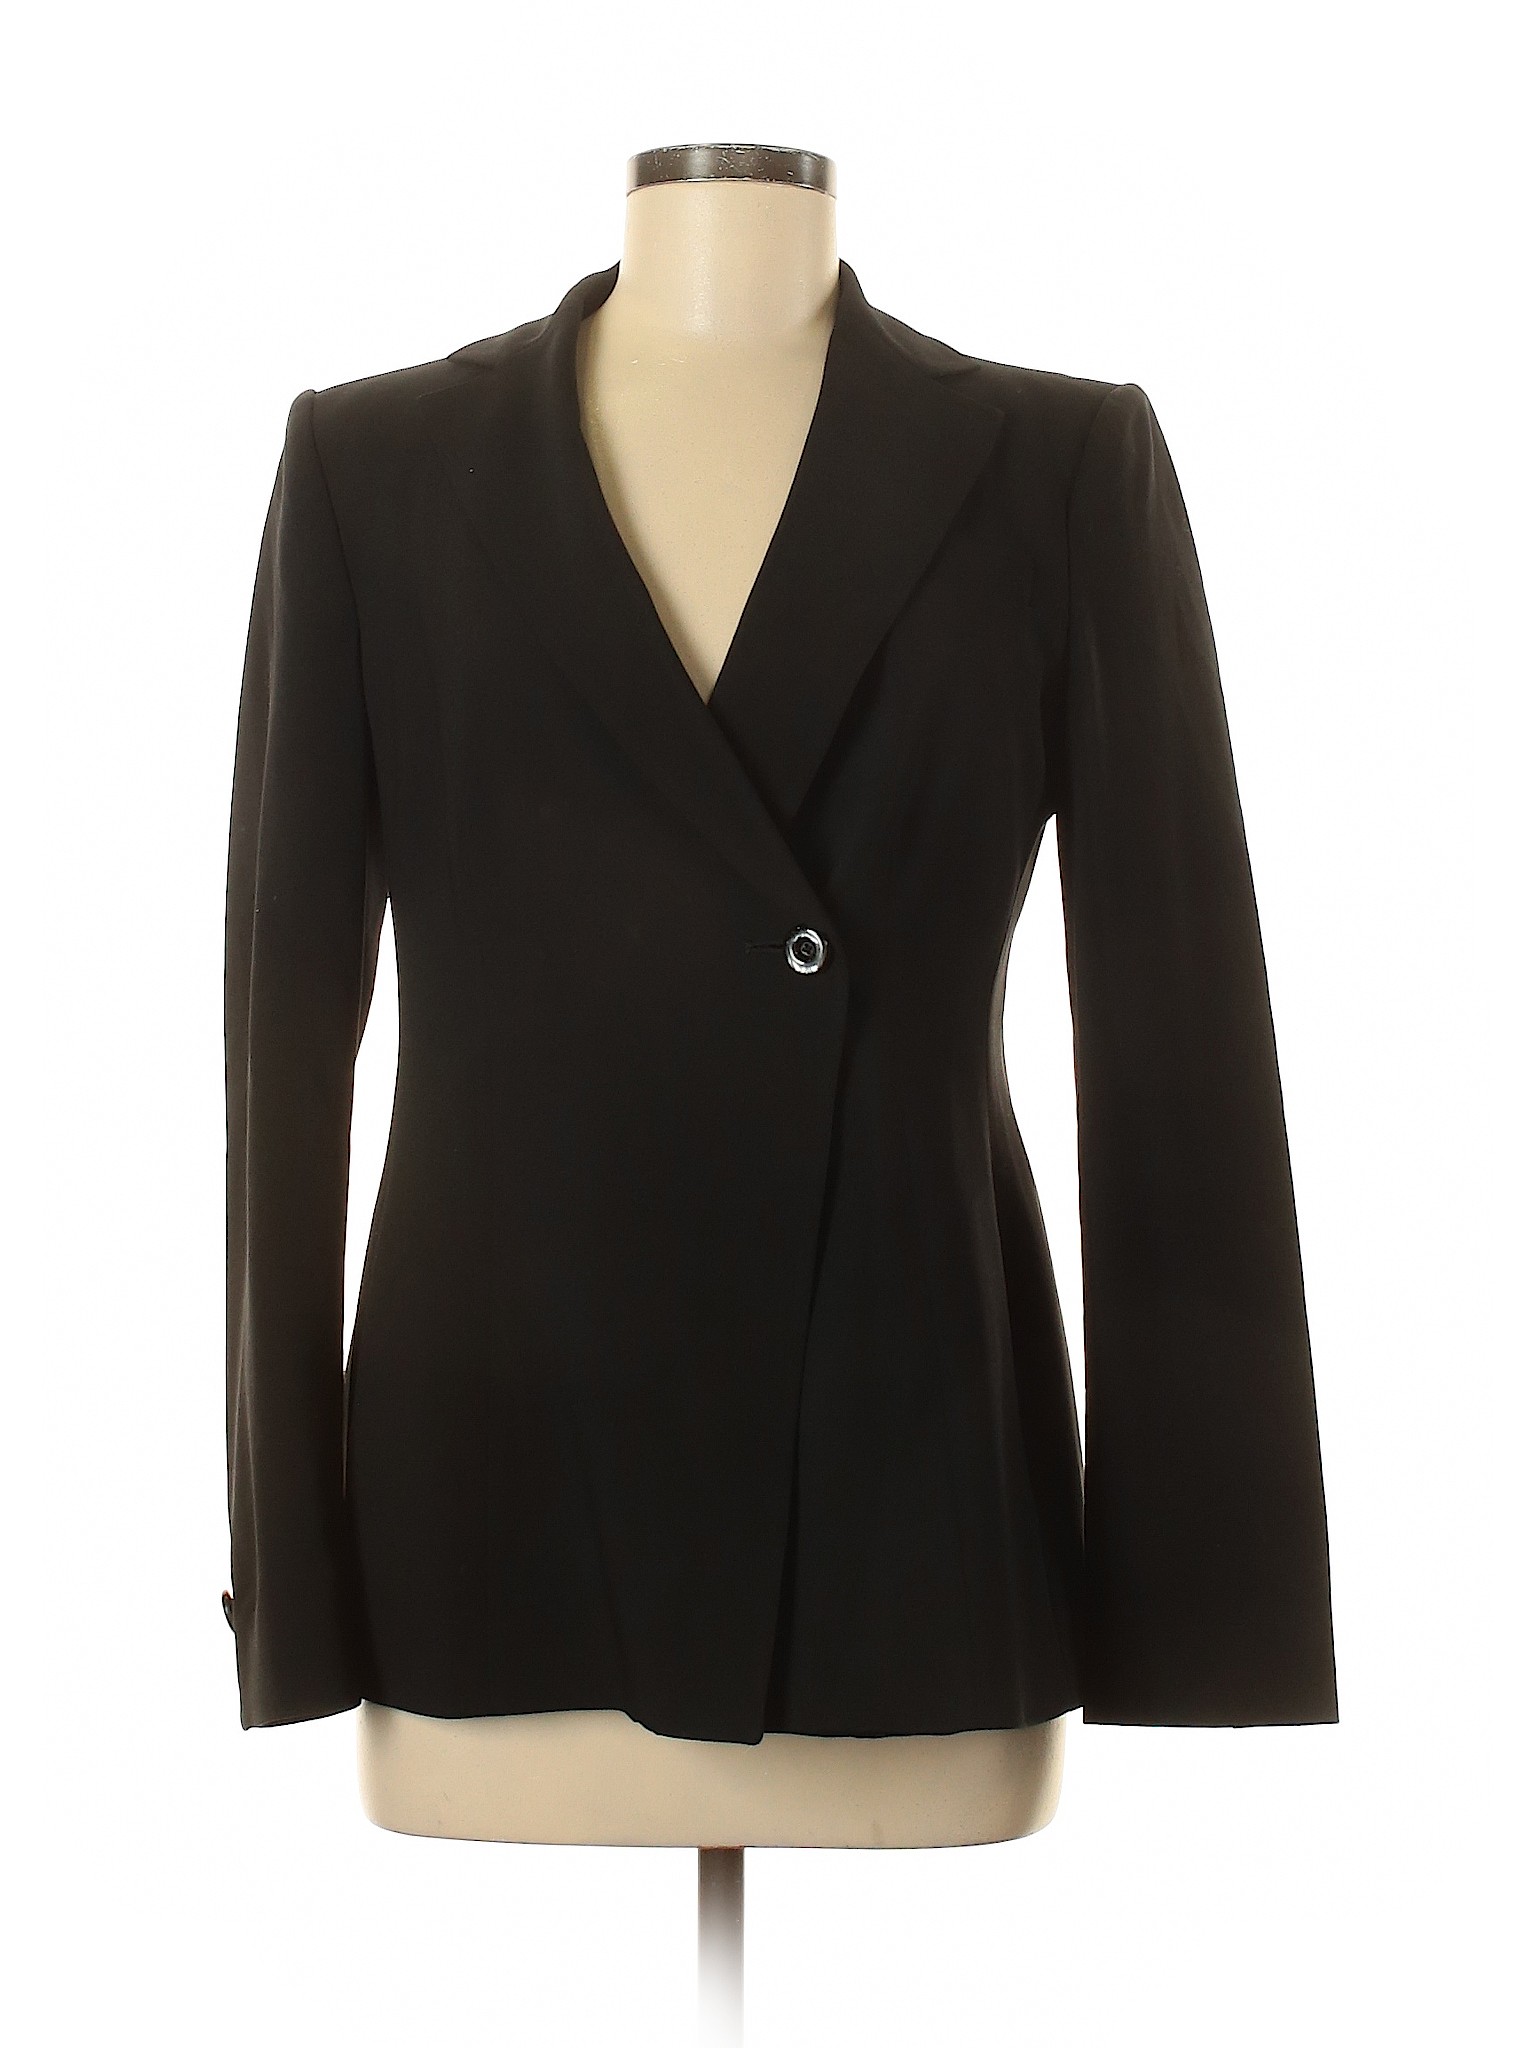 Armani Collezioni Women Black Wool Blazer 6 | eBay